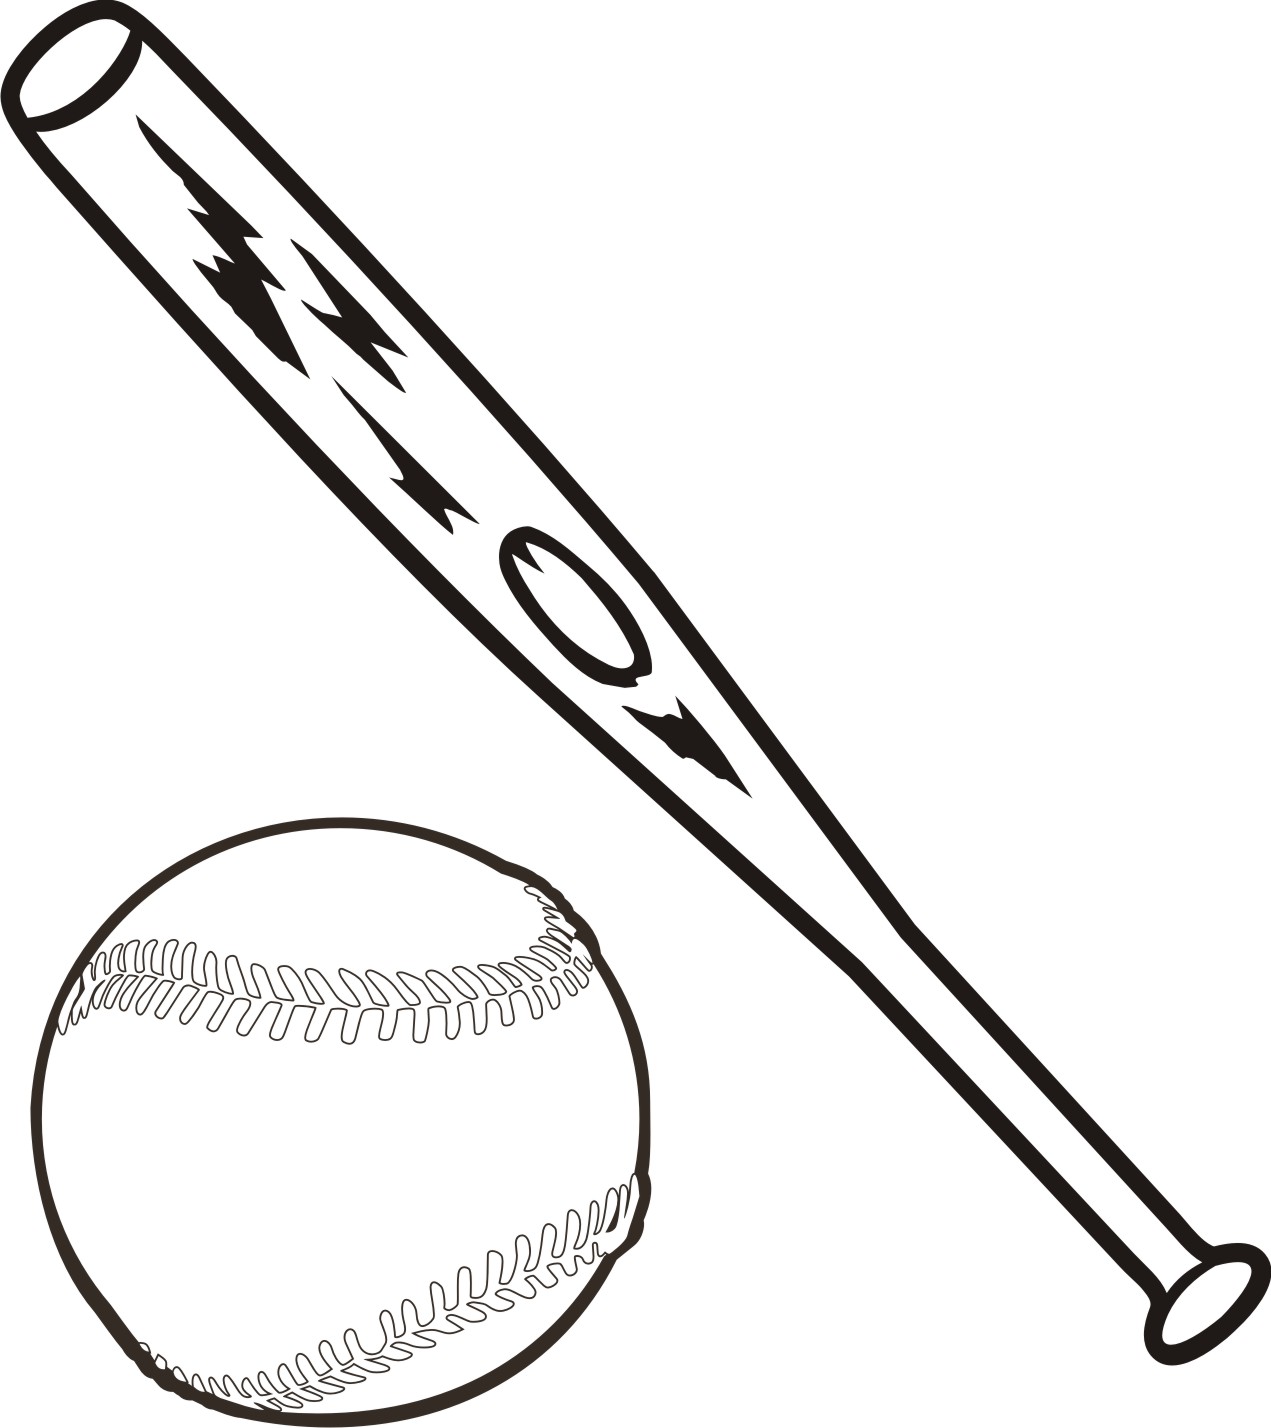 Images For > Wooden Baseball Bat Clip Art